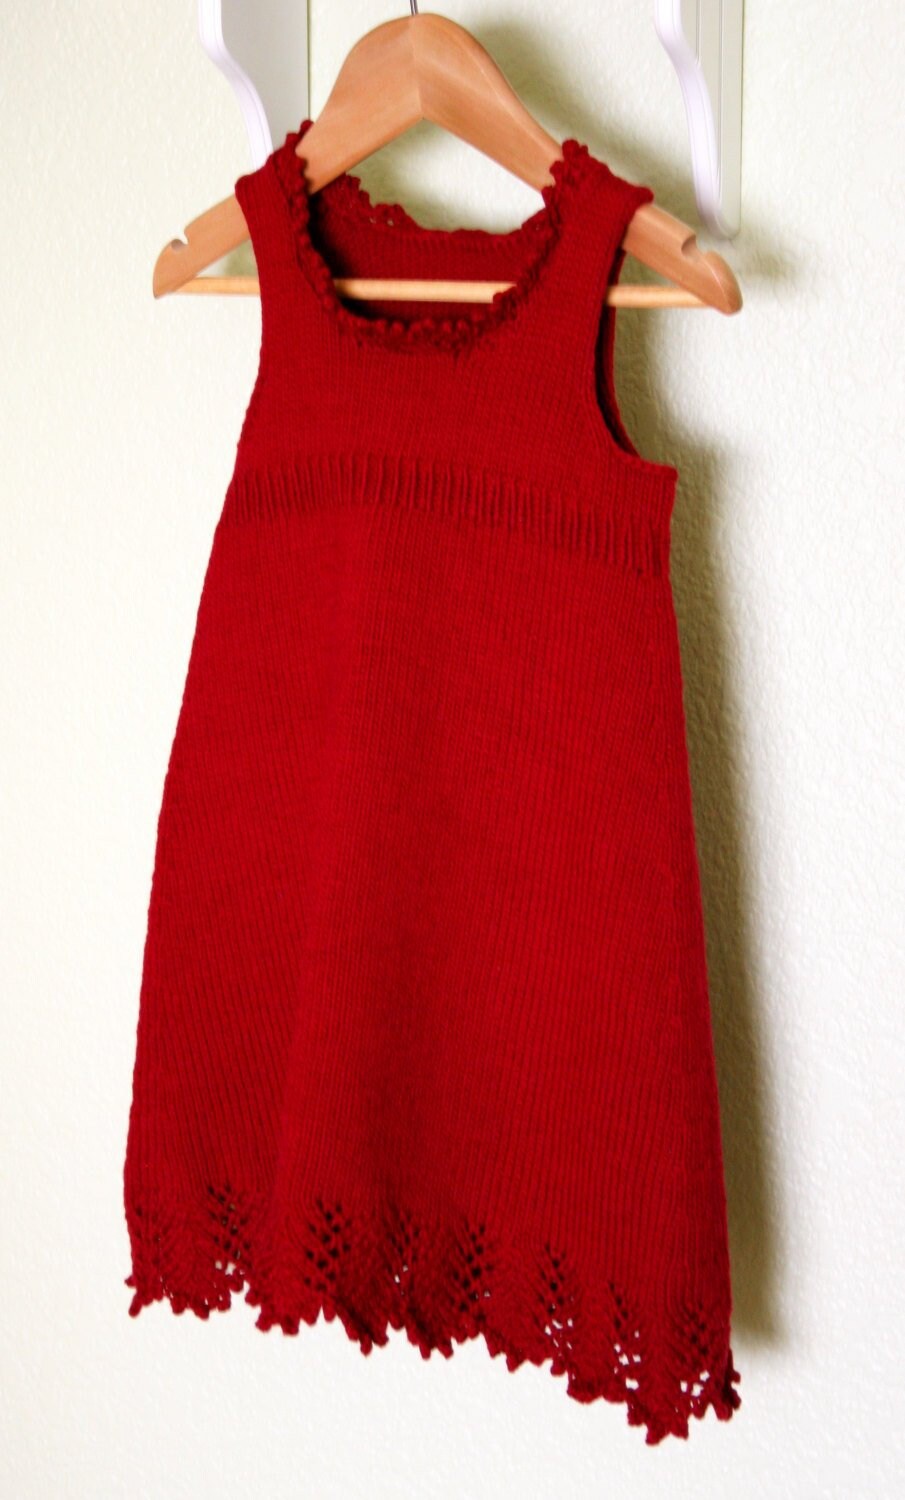 Children's Dress Knitting Pattern with Lace Hem and Neckline • Very Cherry Knitting Pattern PDF • Intermediate Knit Pattern